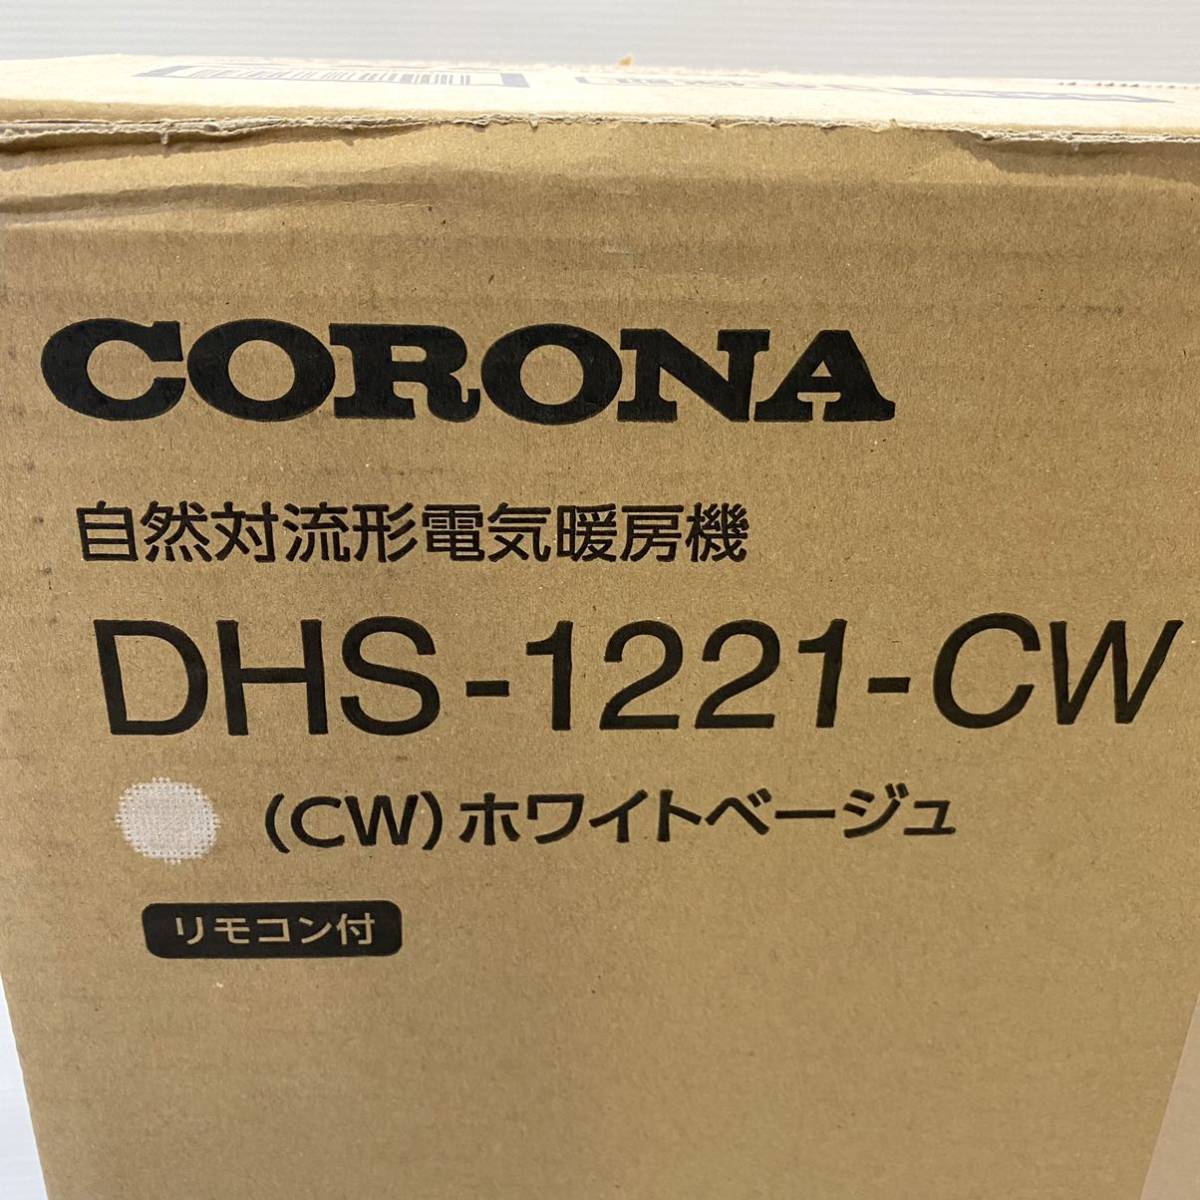 CORONA DHS-1221(CW) オイルレスヒーター ノイルヒート 暖房器具